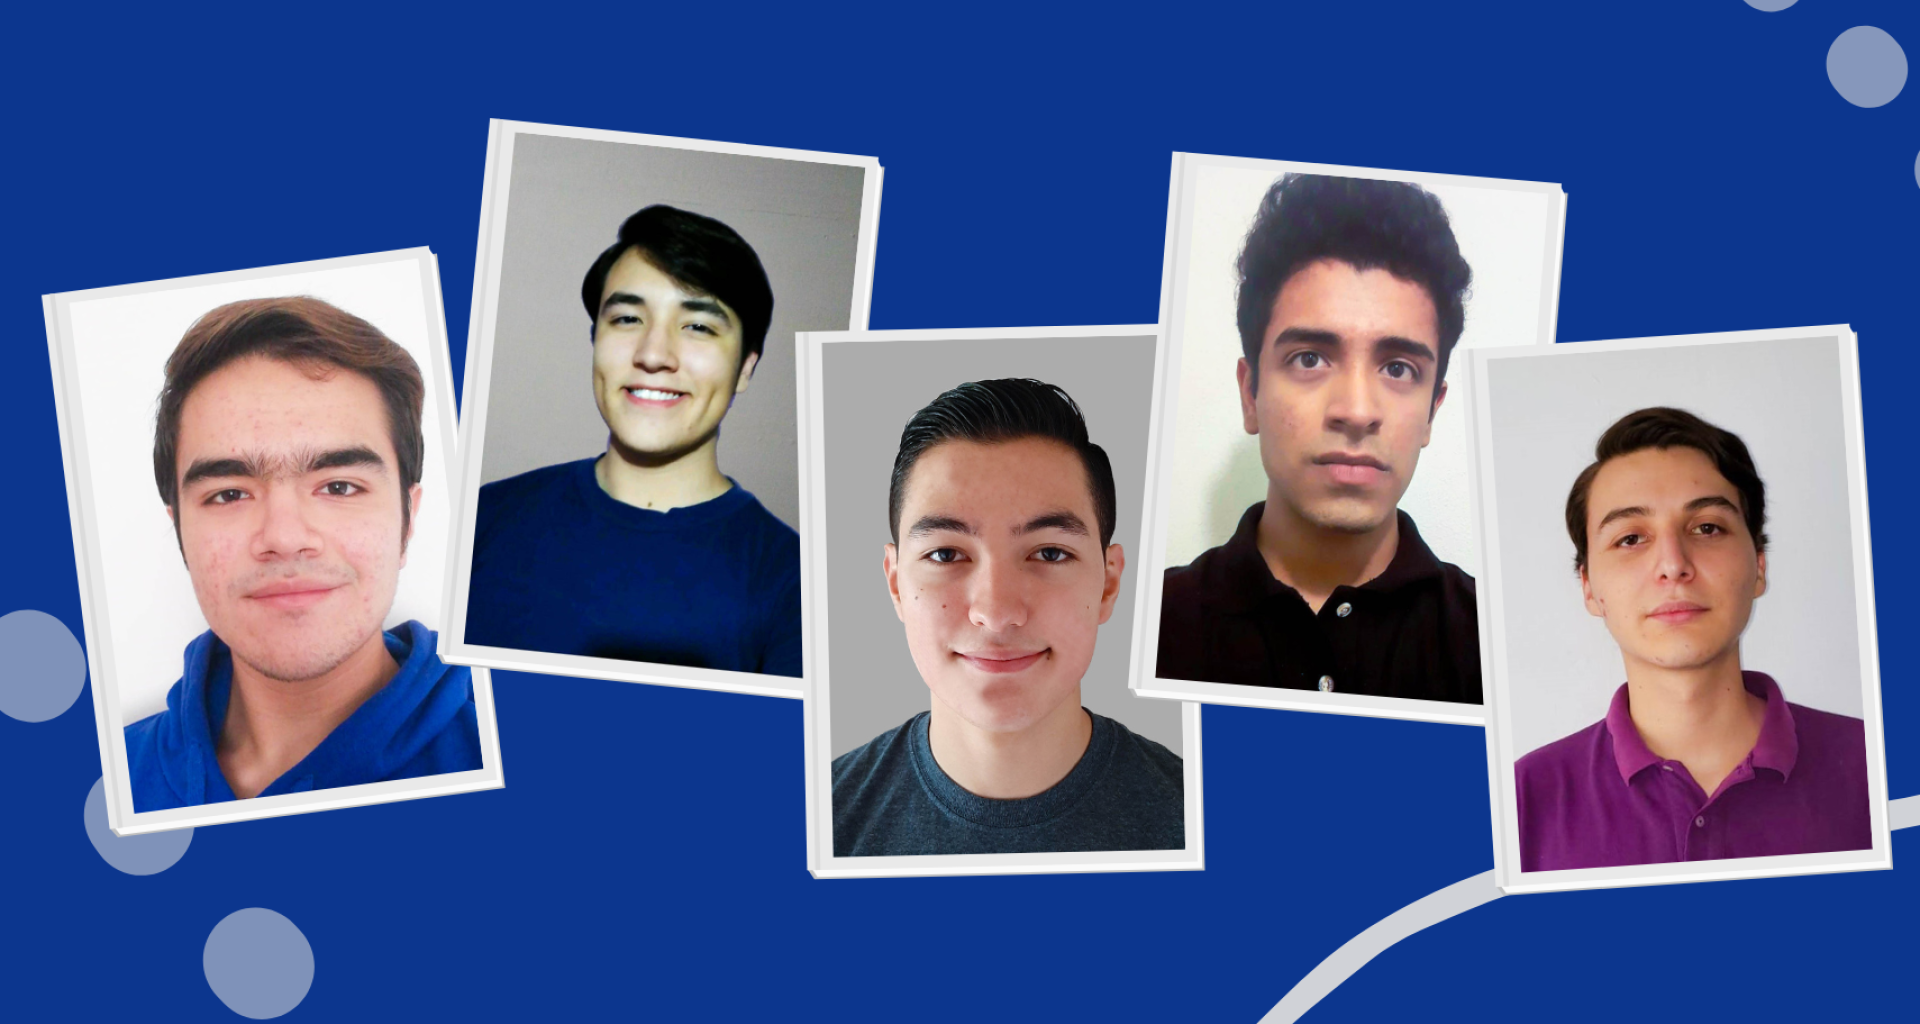 Cinco chihuahuenses de excelencia cumplen el sueño de estudiar en el Tec de Monterrey, gracias a “Jóvenes promesa”, beca del consejo del campus Chihuahua